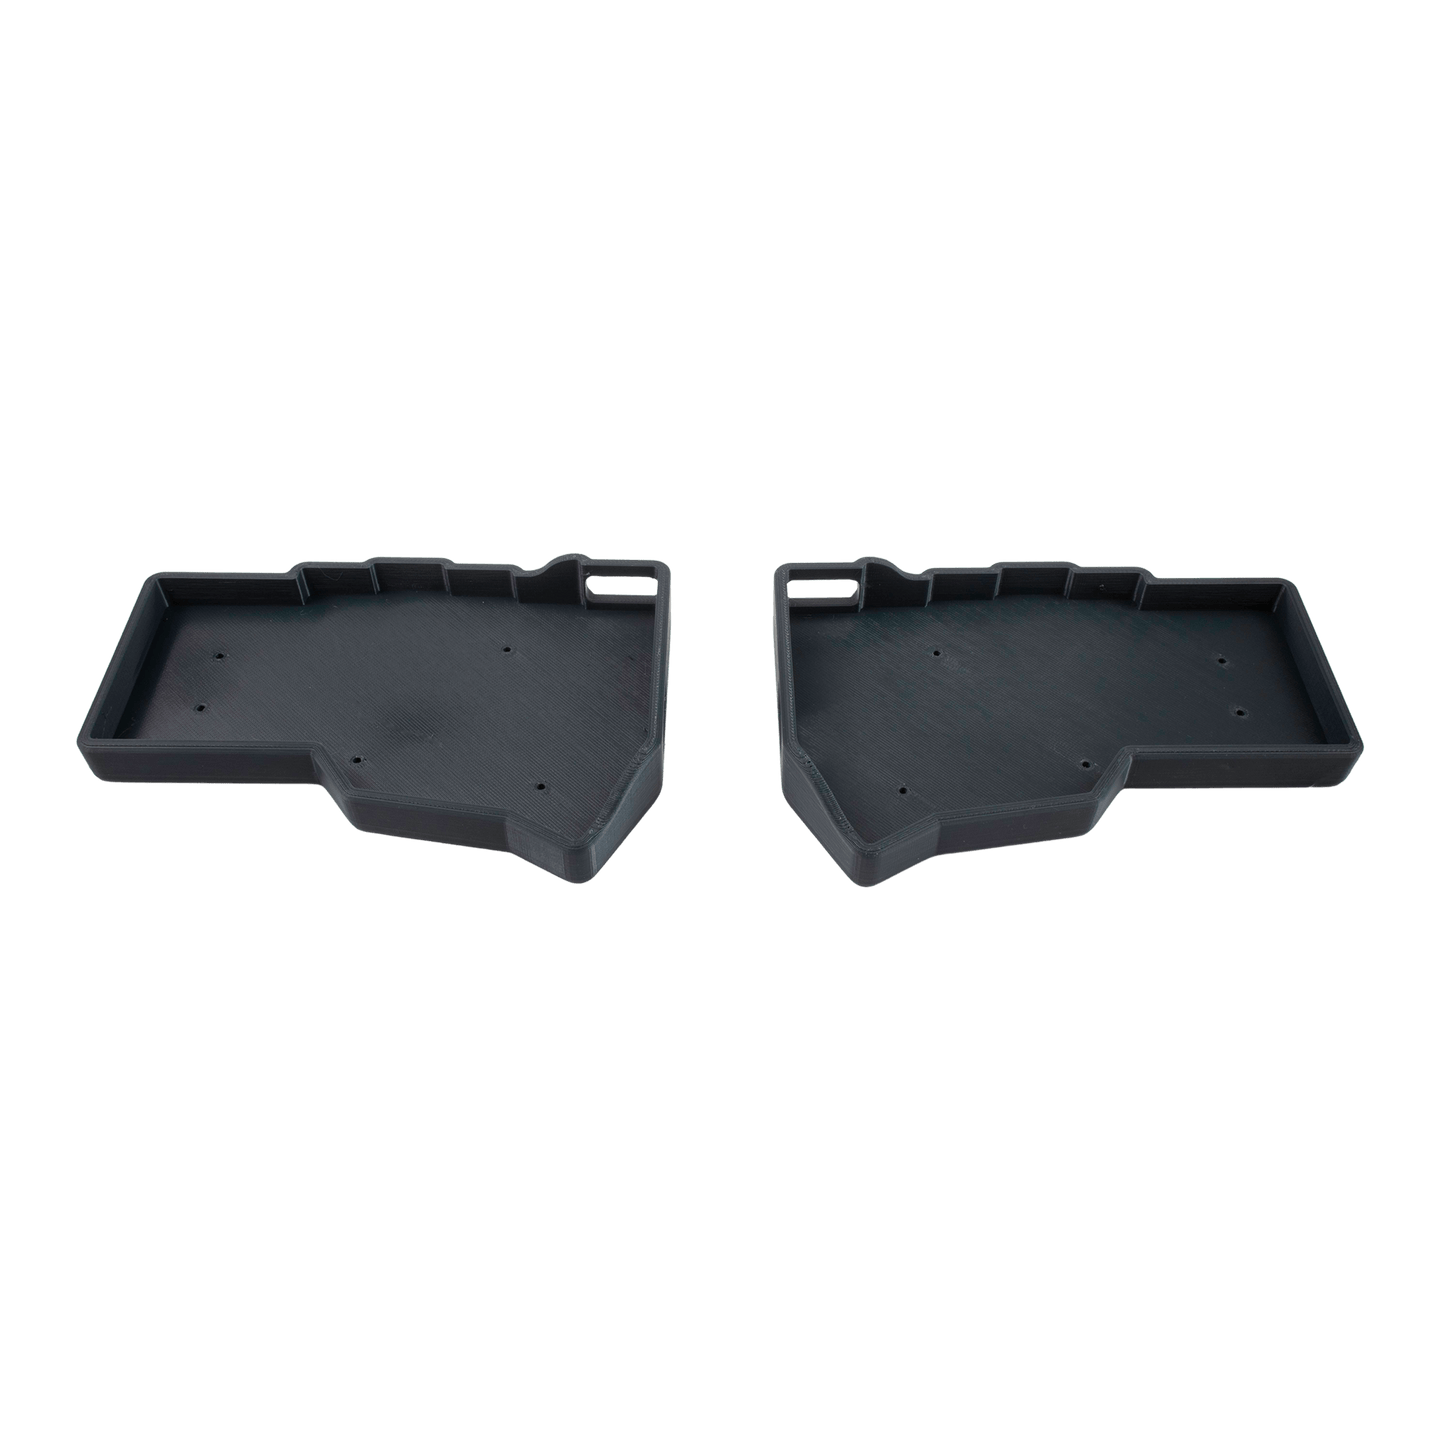 3D Printed Helidox Corne Case Low Profile